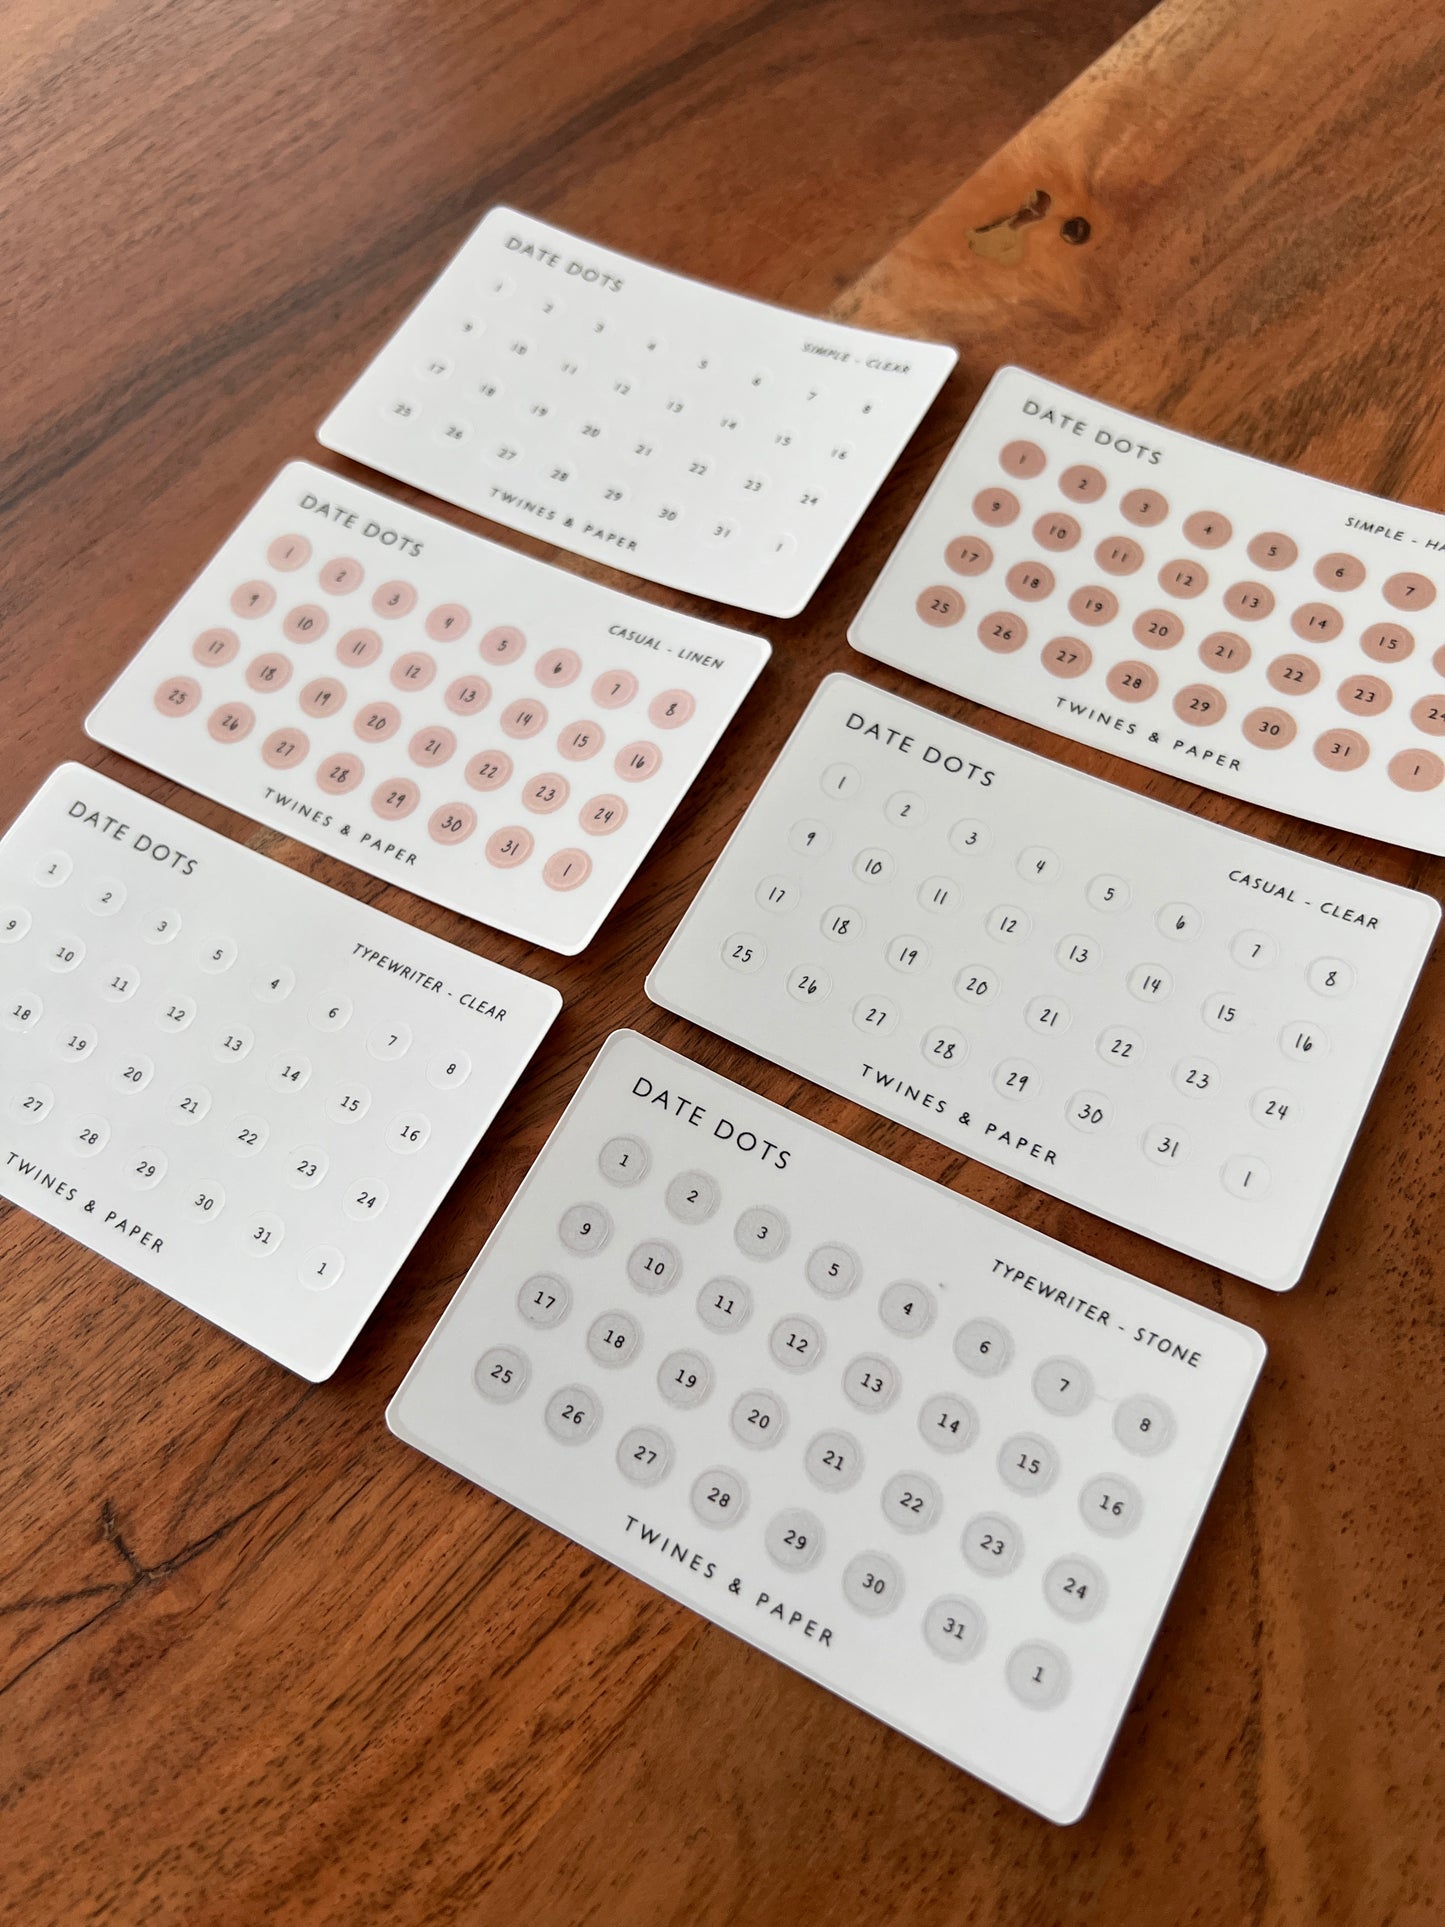 Date Dots Stickers • 3 Fonts • Business Card Size • Transparent Matte